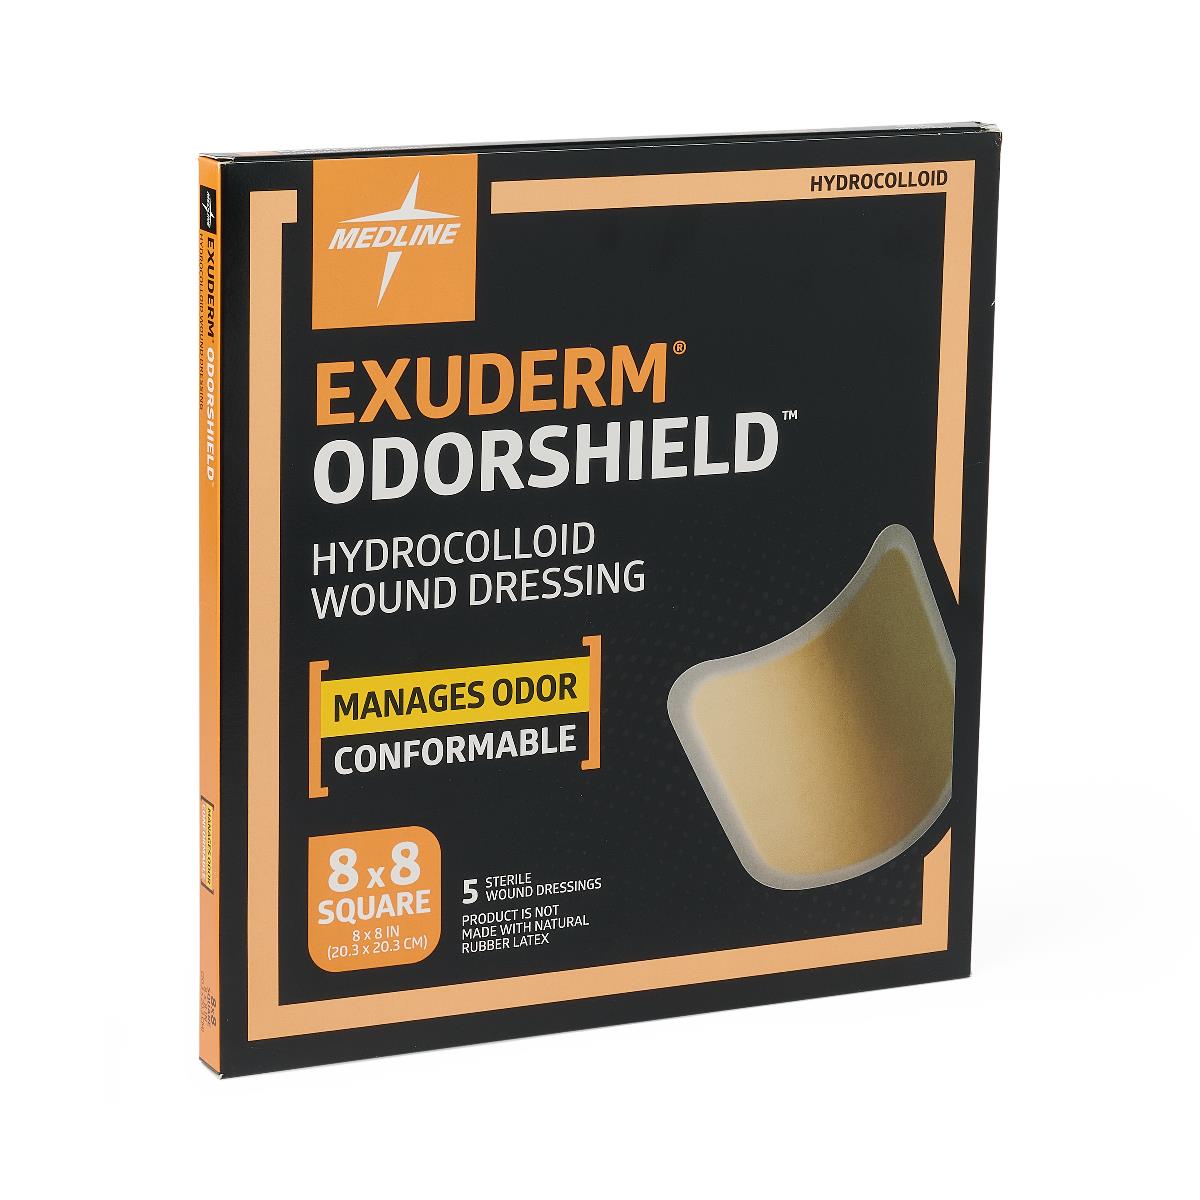 Exuderm Odorshield 8x8 Hydrocolloid Wound Dressing 5/bx MSC5588